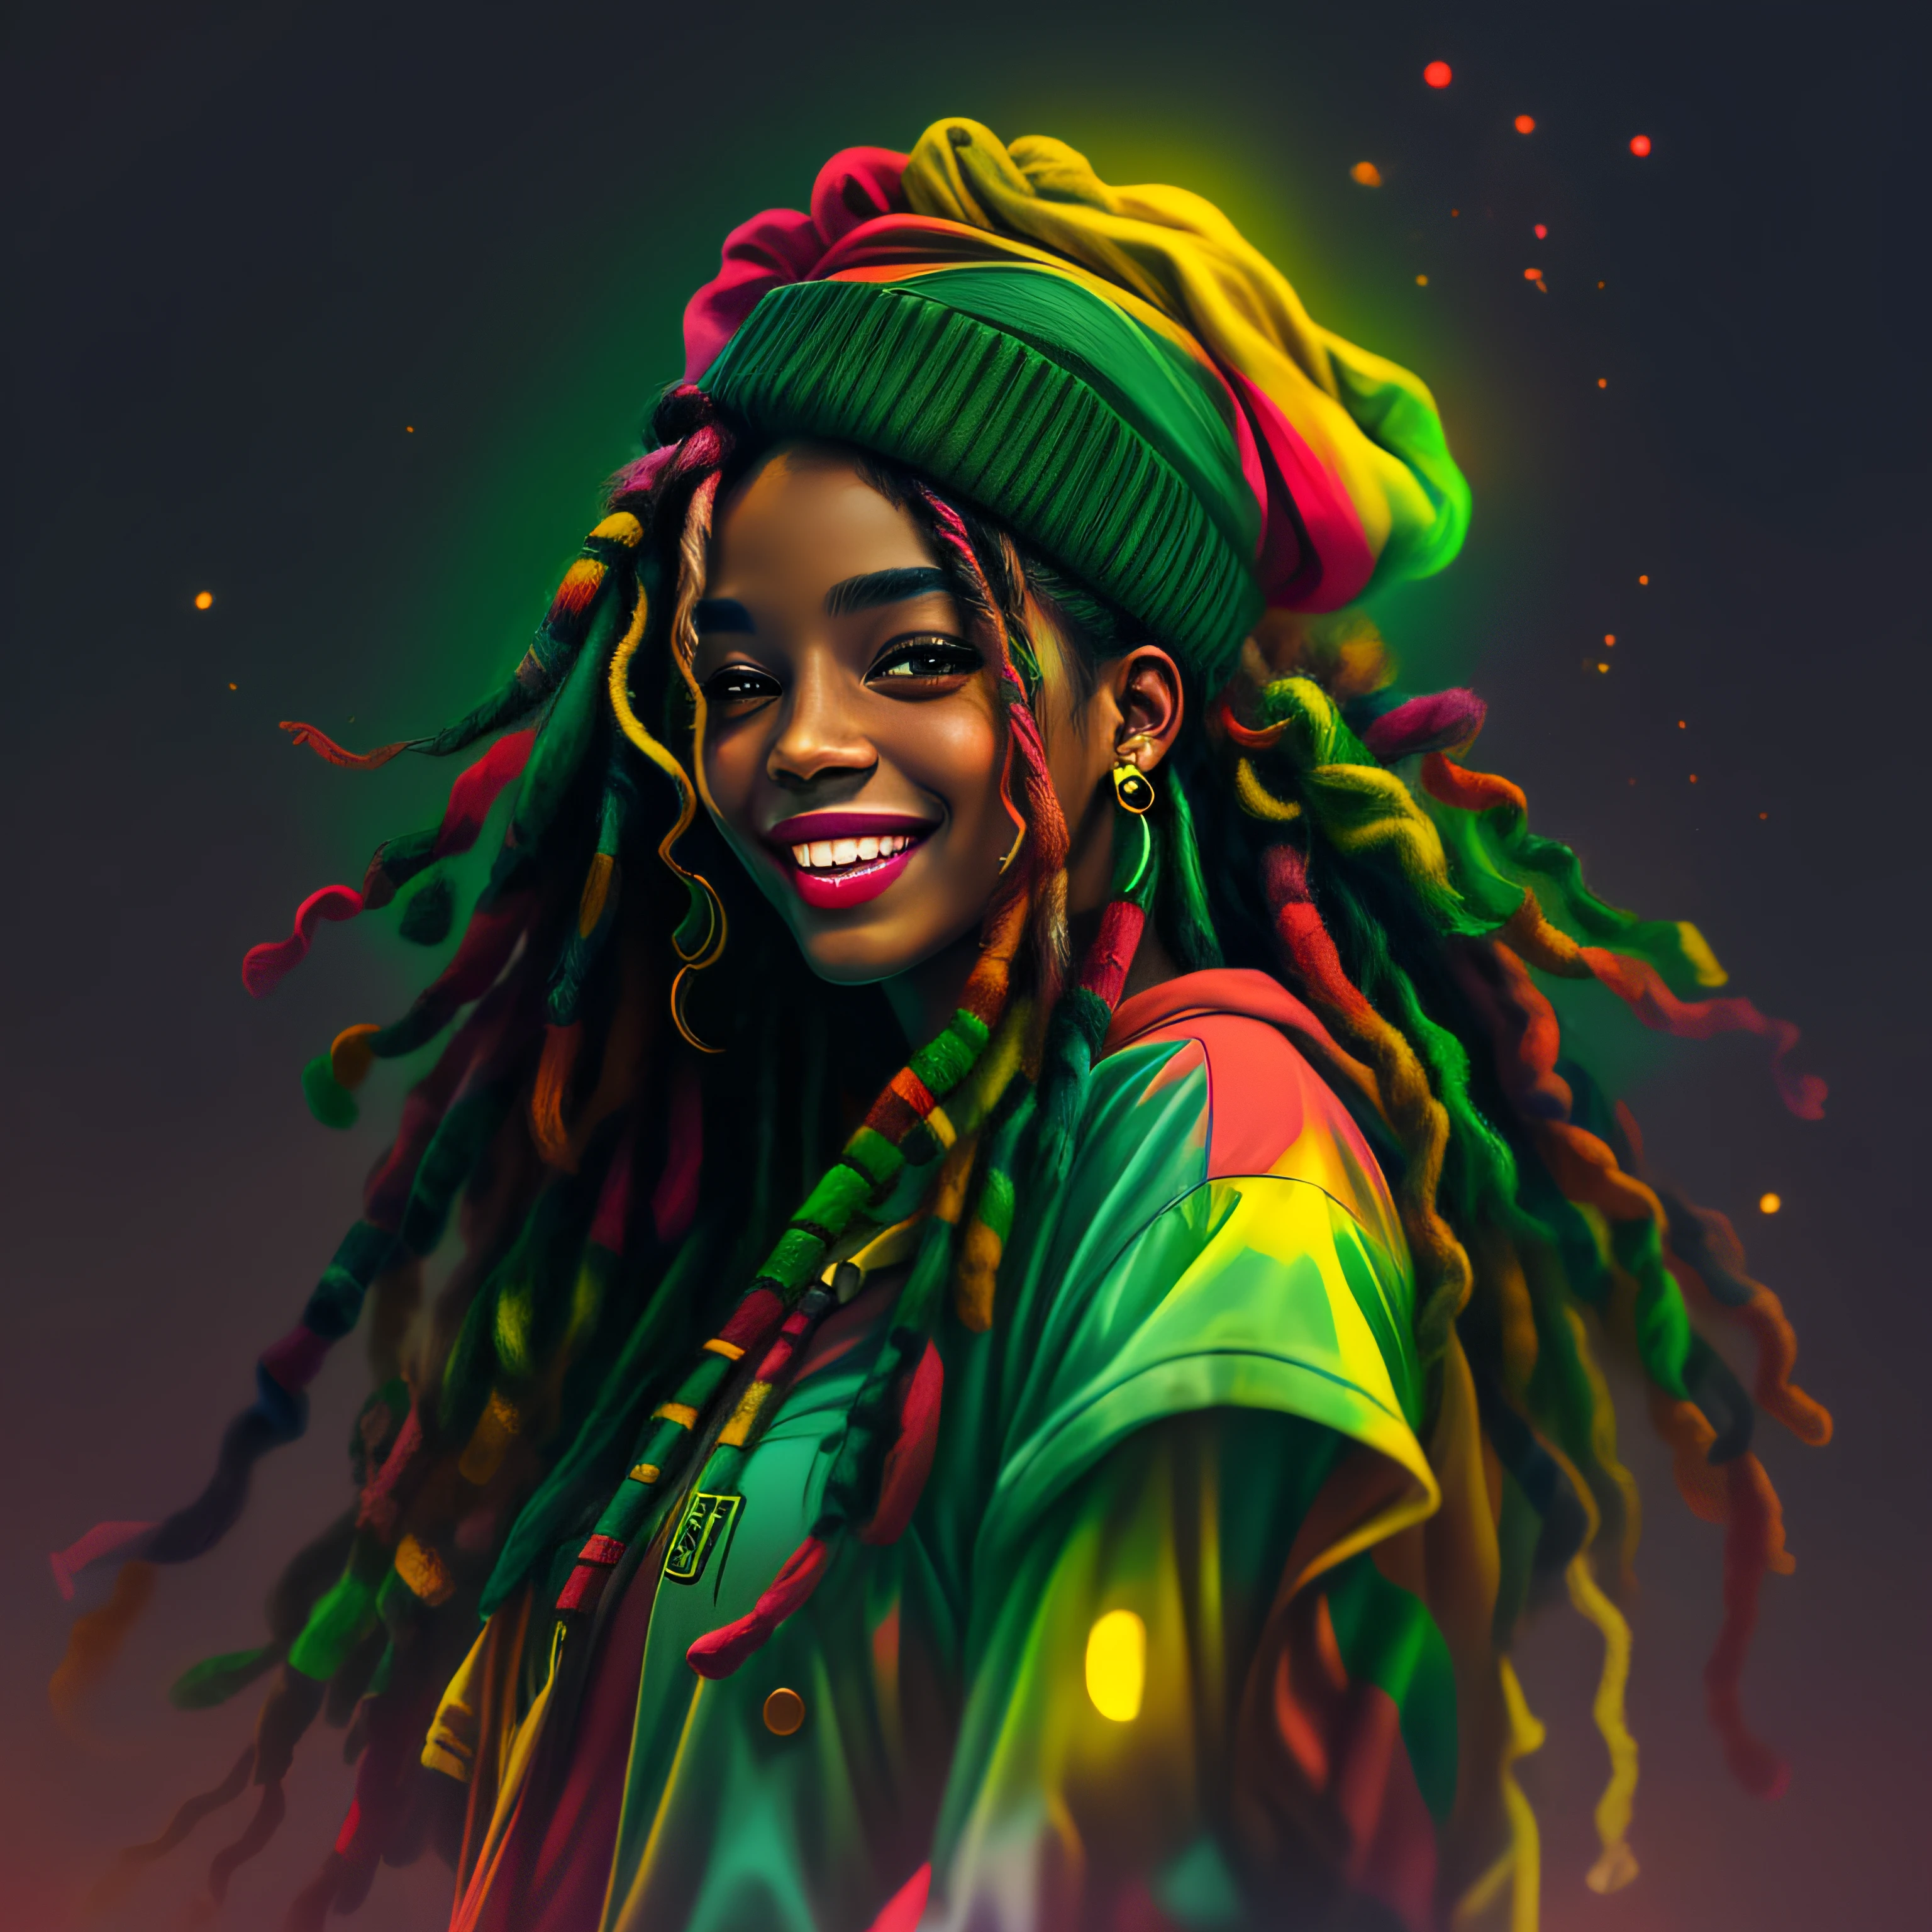 arte vectorial, arte borroso (1 chica rasta sonriendo con ropa de color reggae) mafia, iluminación cinematográfica estilo neón